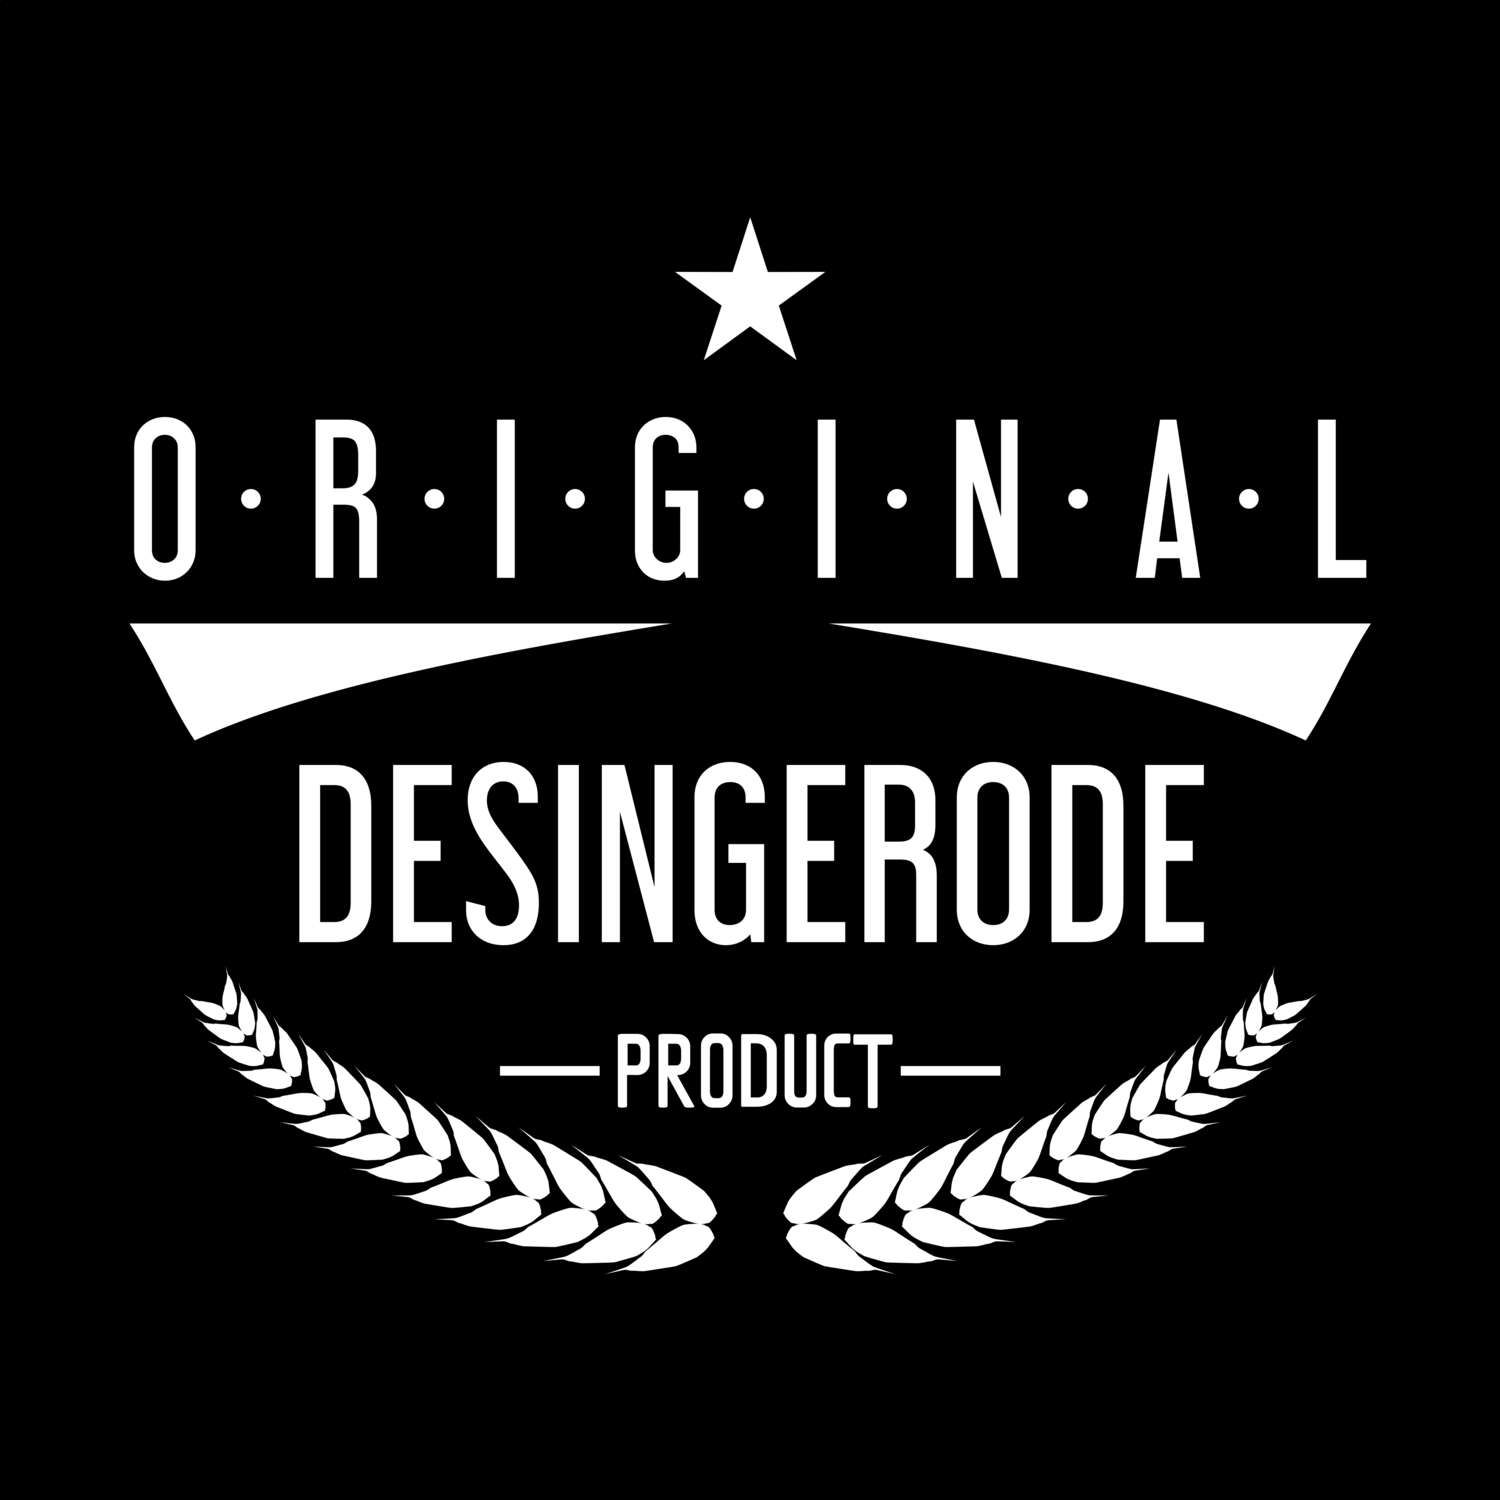 Desingerode T-Shirt »Original Product«